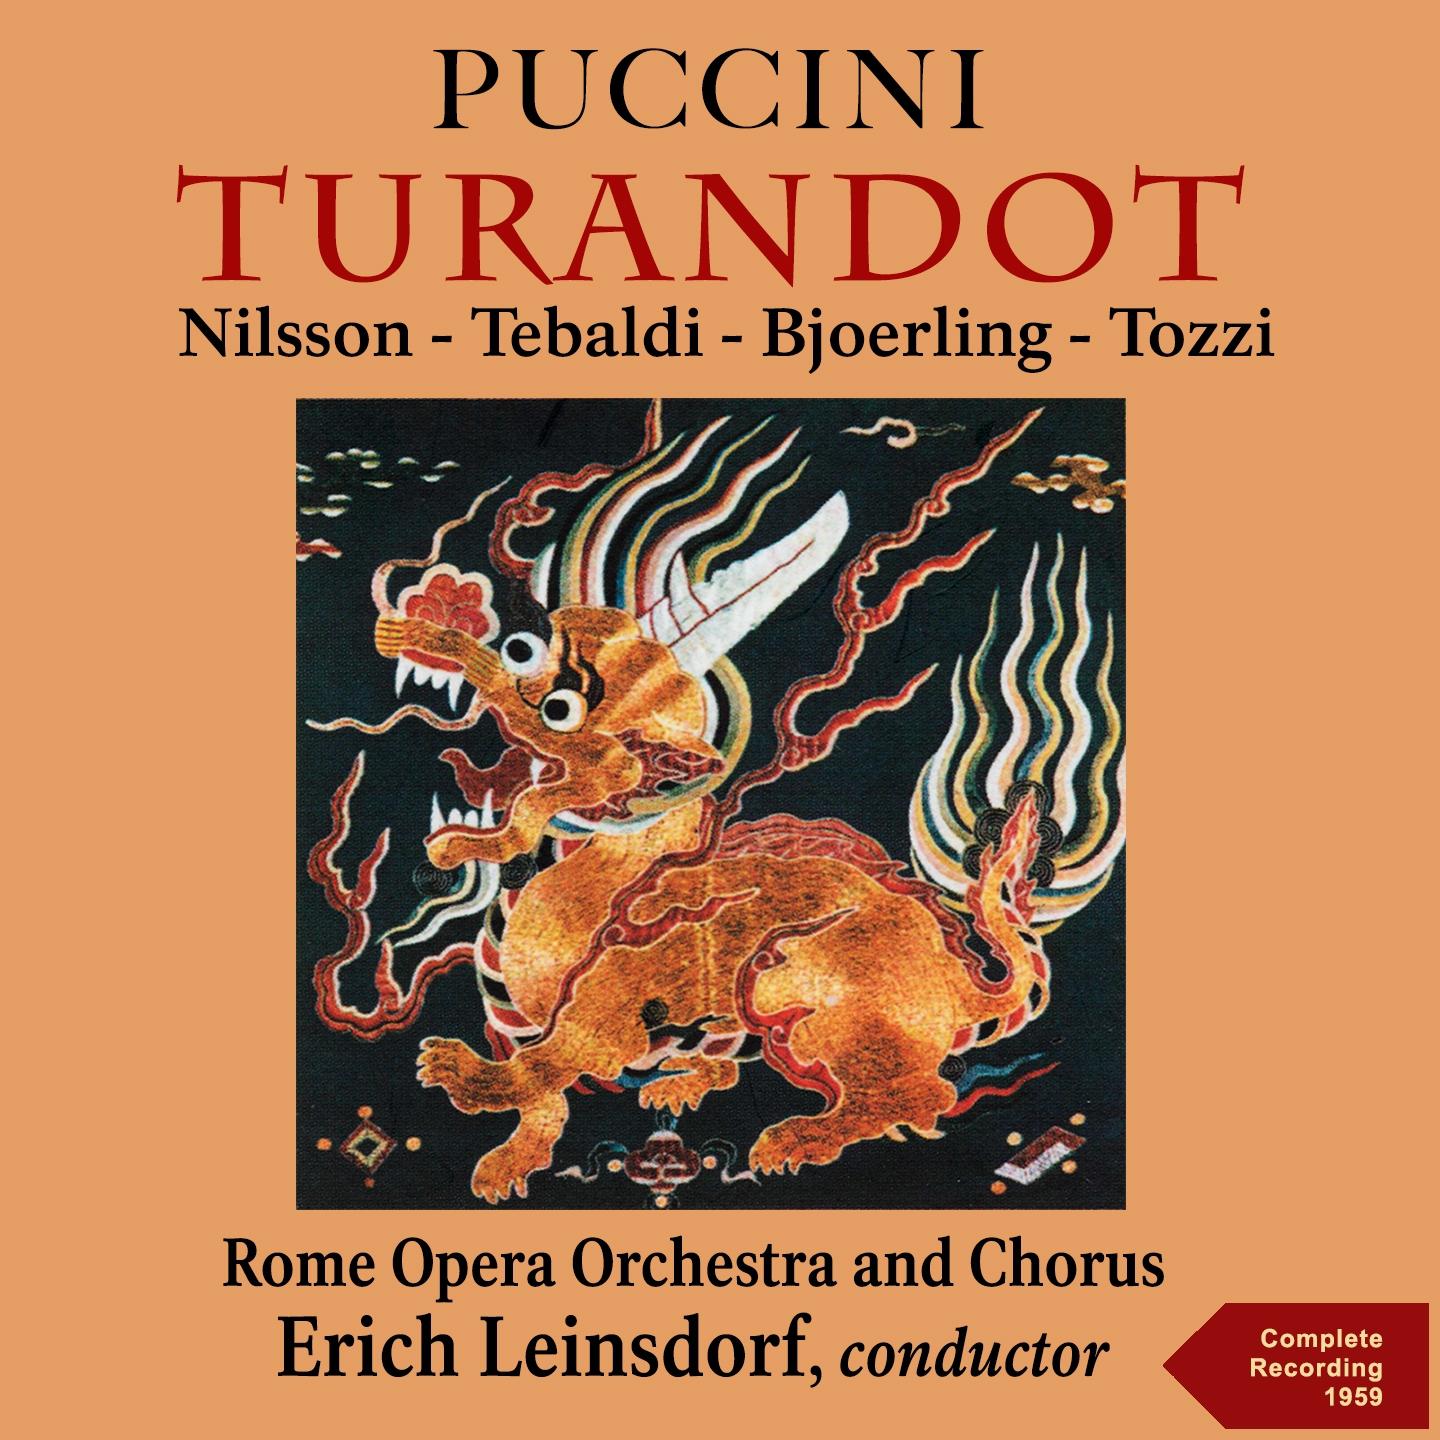 Turandot, Act II, Scene 2: " Gelo che ti da foco" Turandot, Calaf, Coro